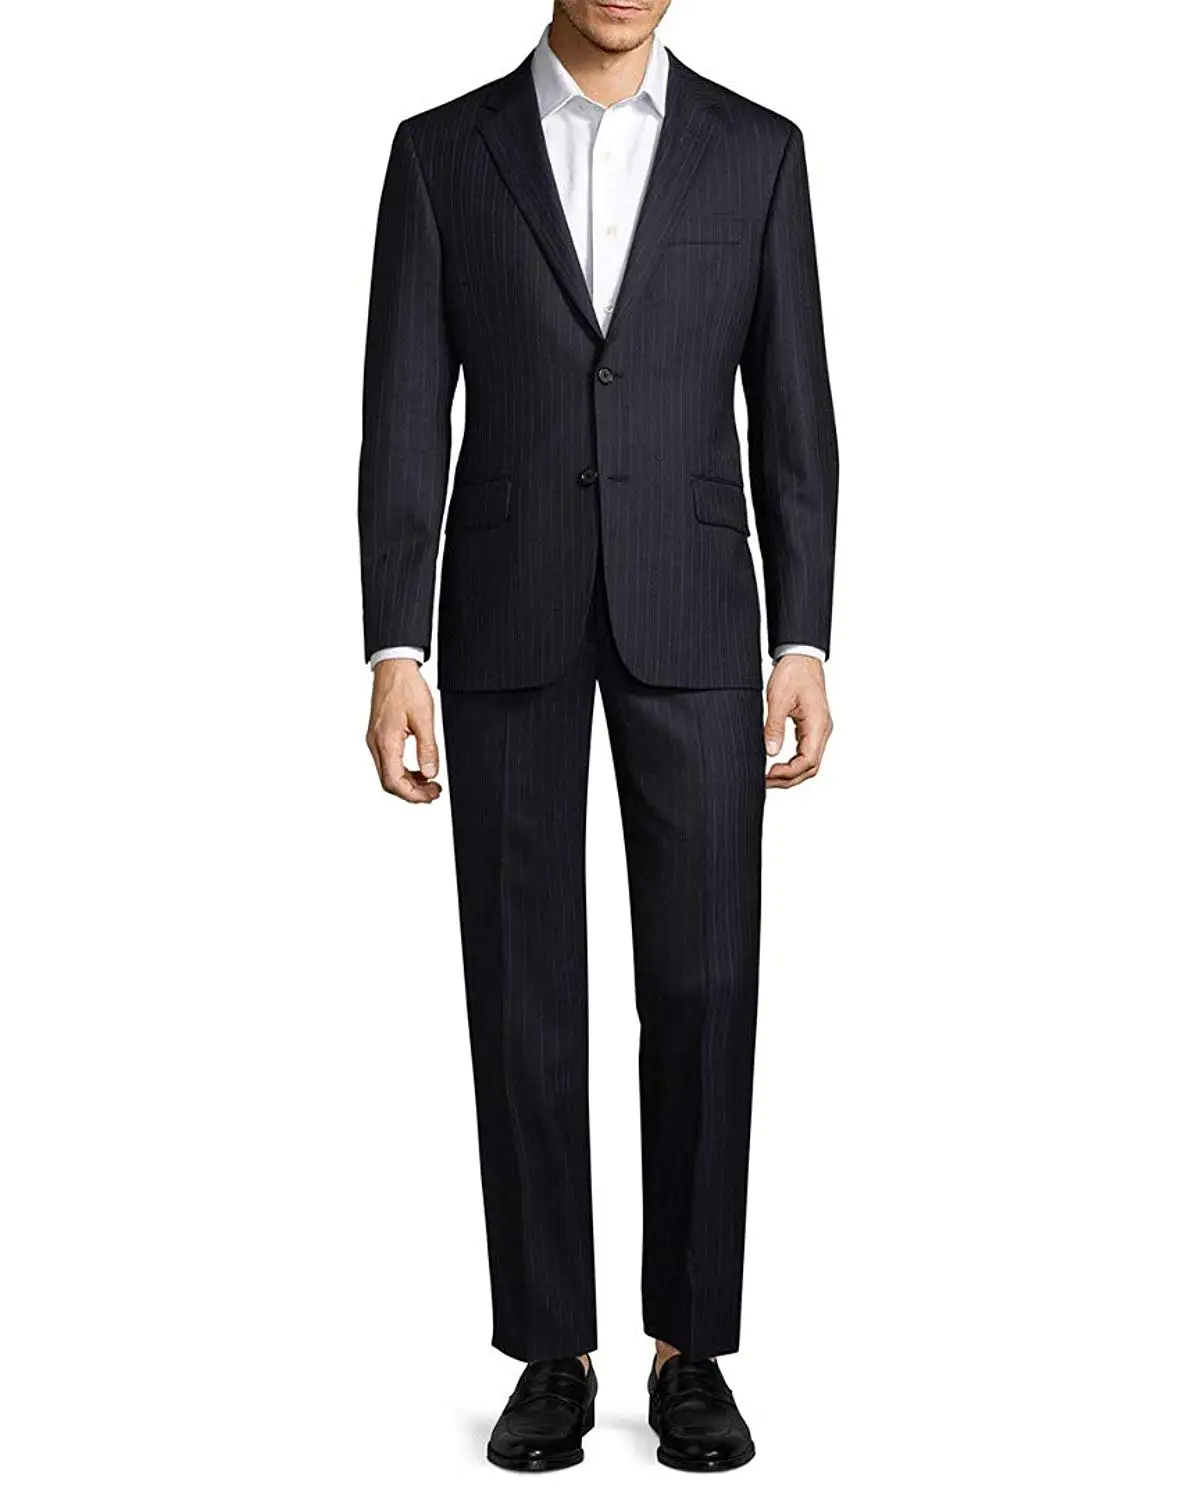 brown pinstriped suit rental